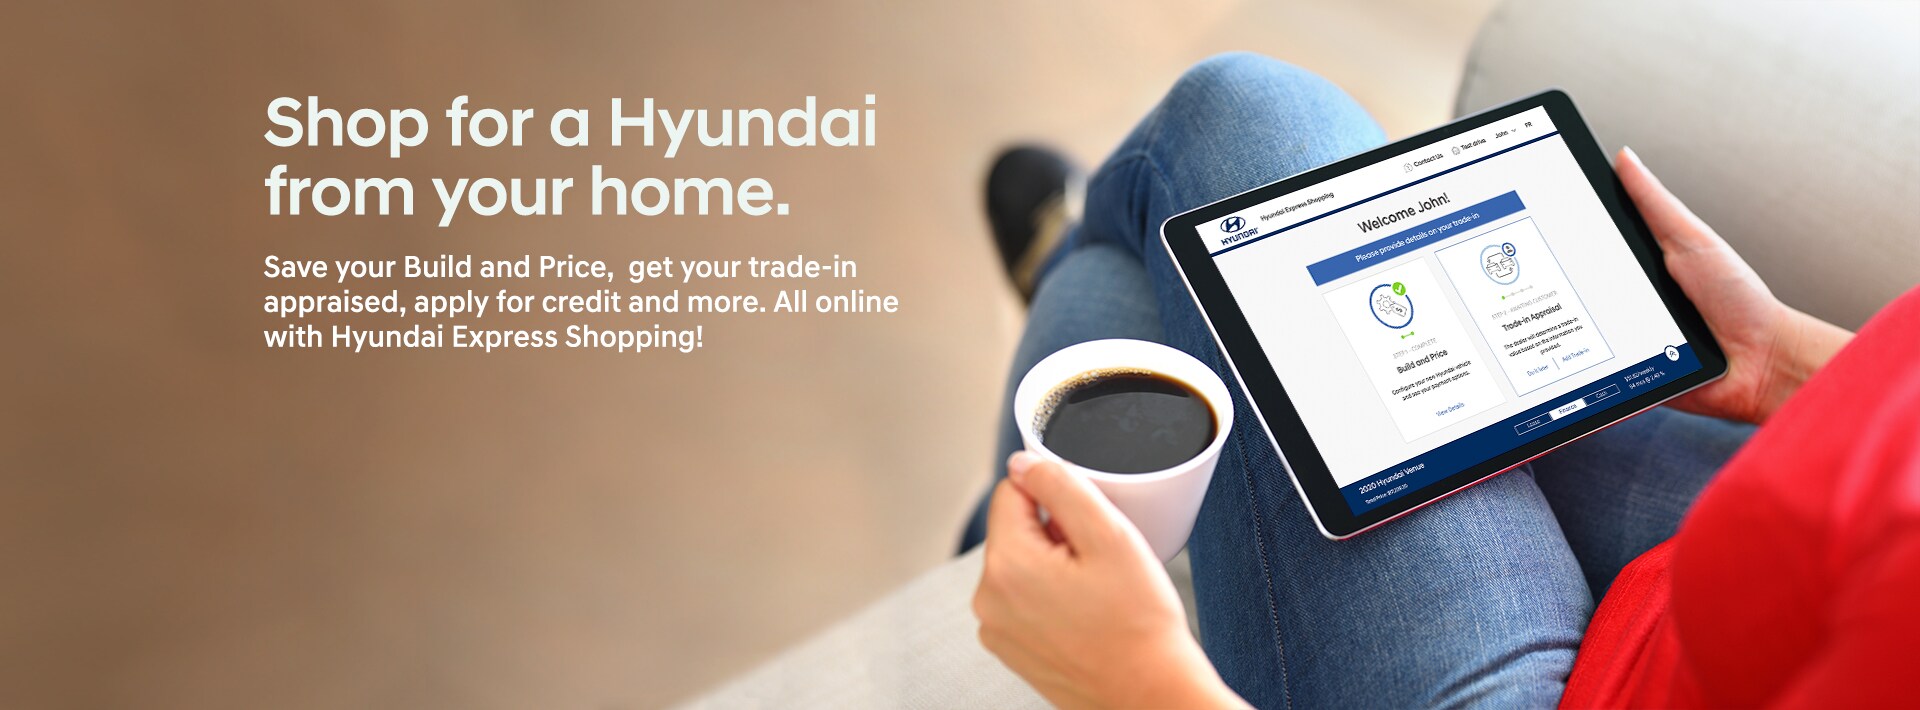 Hyundai Express Shopping